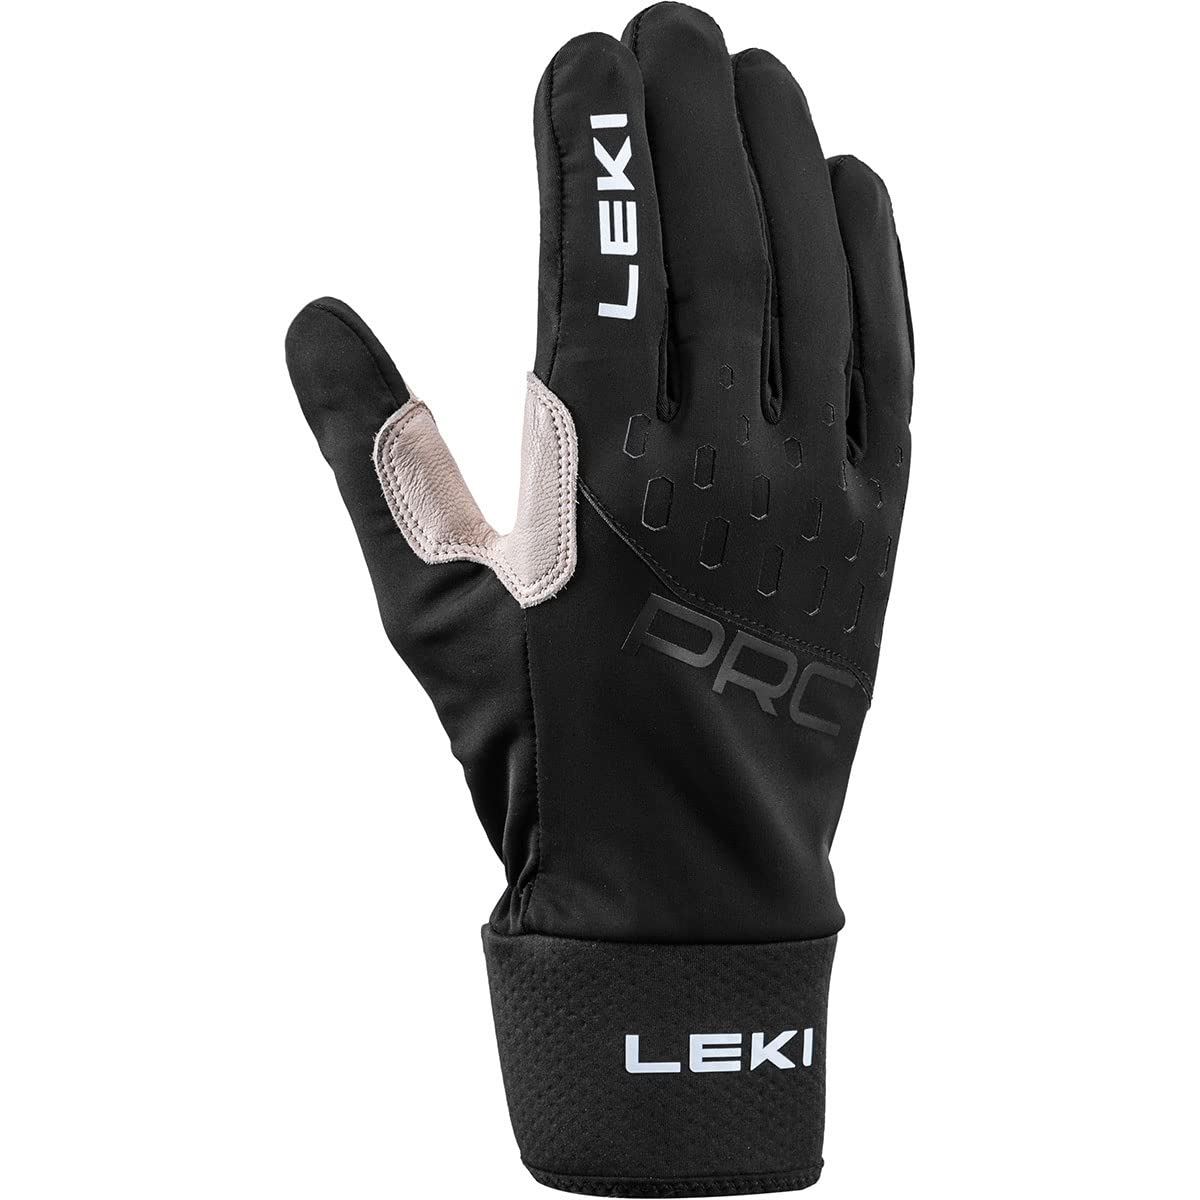 LEKI PRC Premium Handschuhe, Black-Sand, EU 9